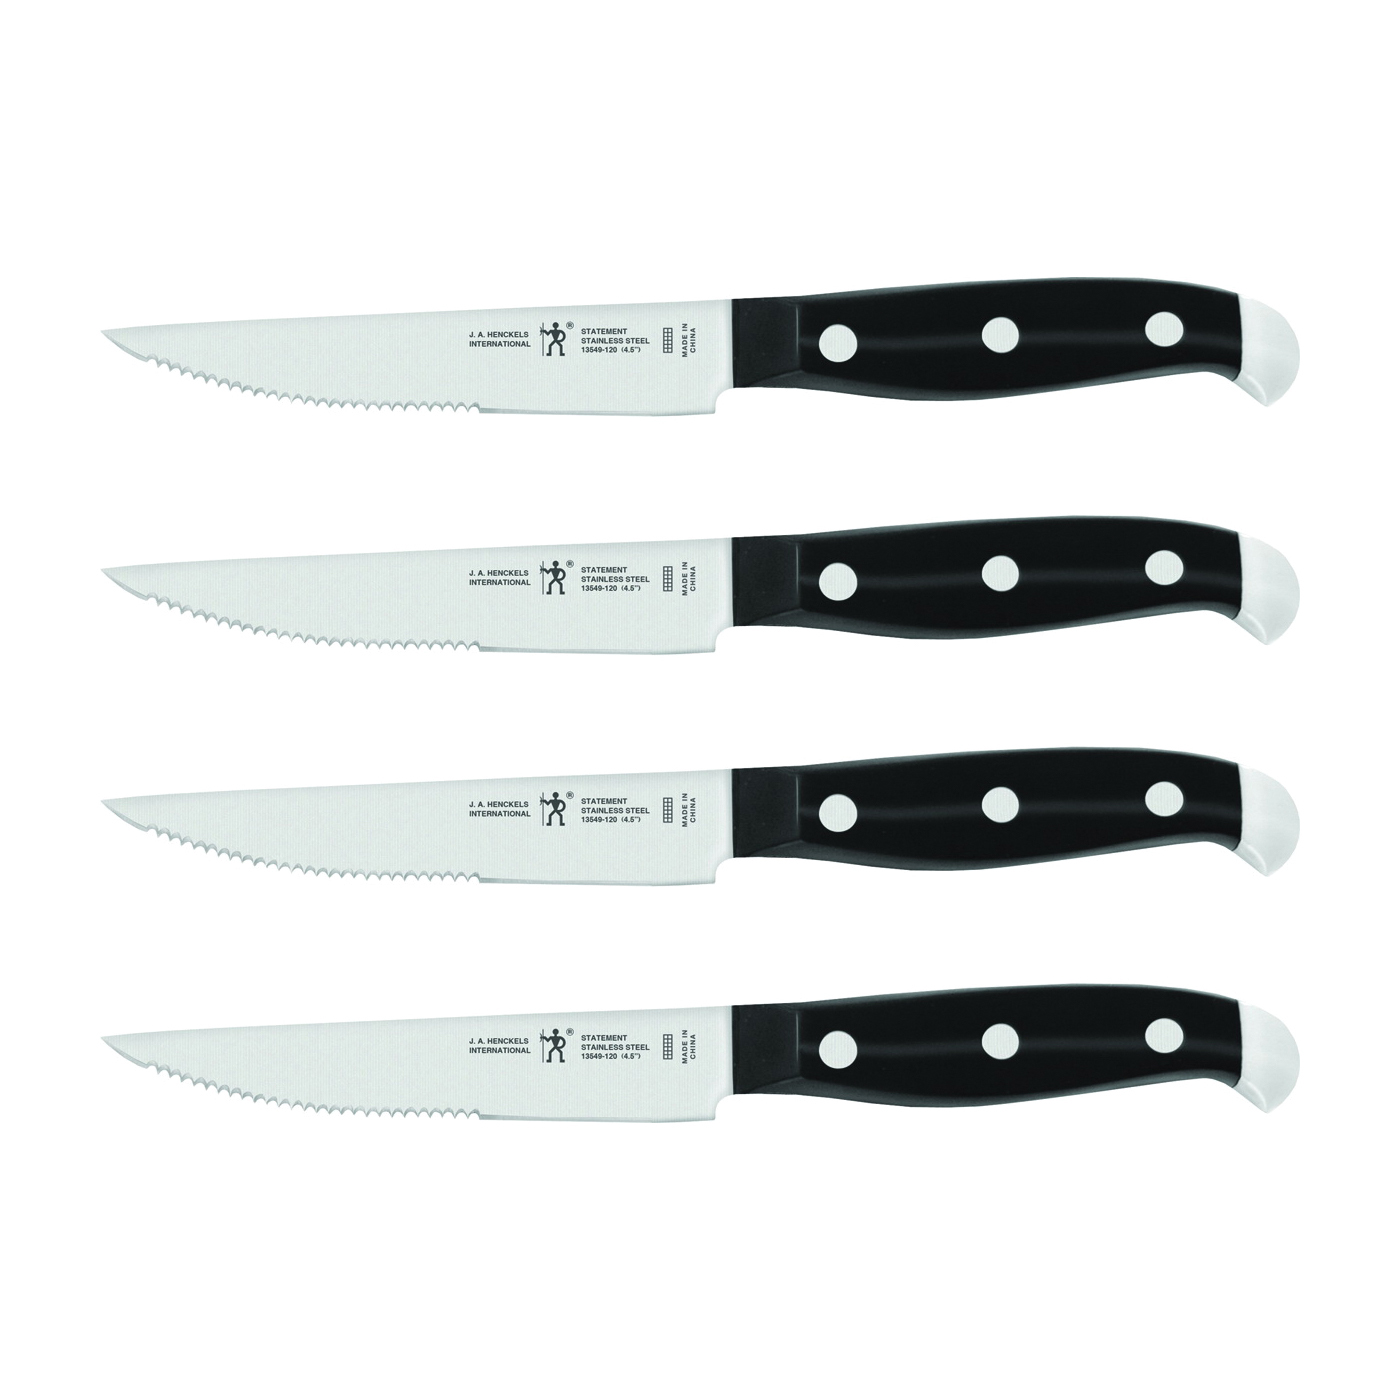 Statement Series 13549-000 Steak Knife Set, Stainless Steel Blade